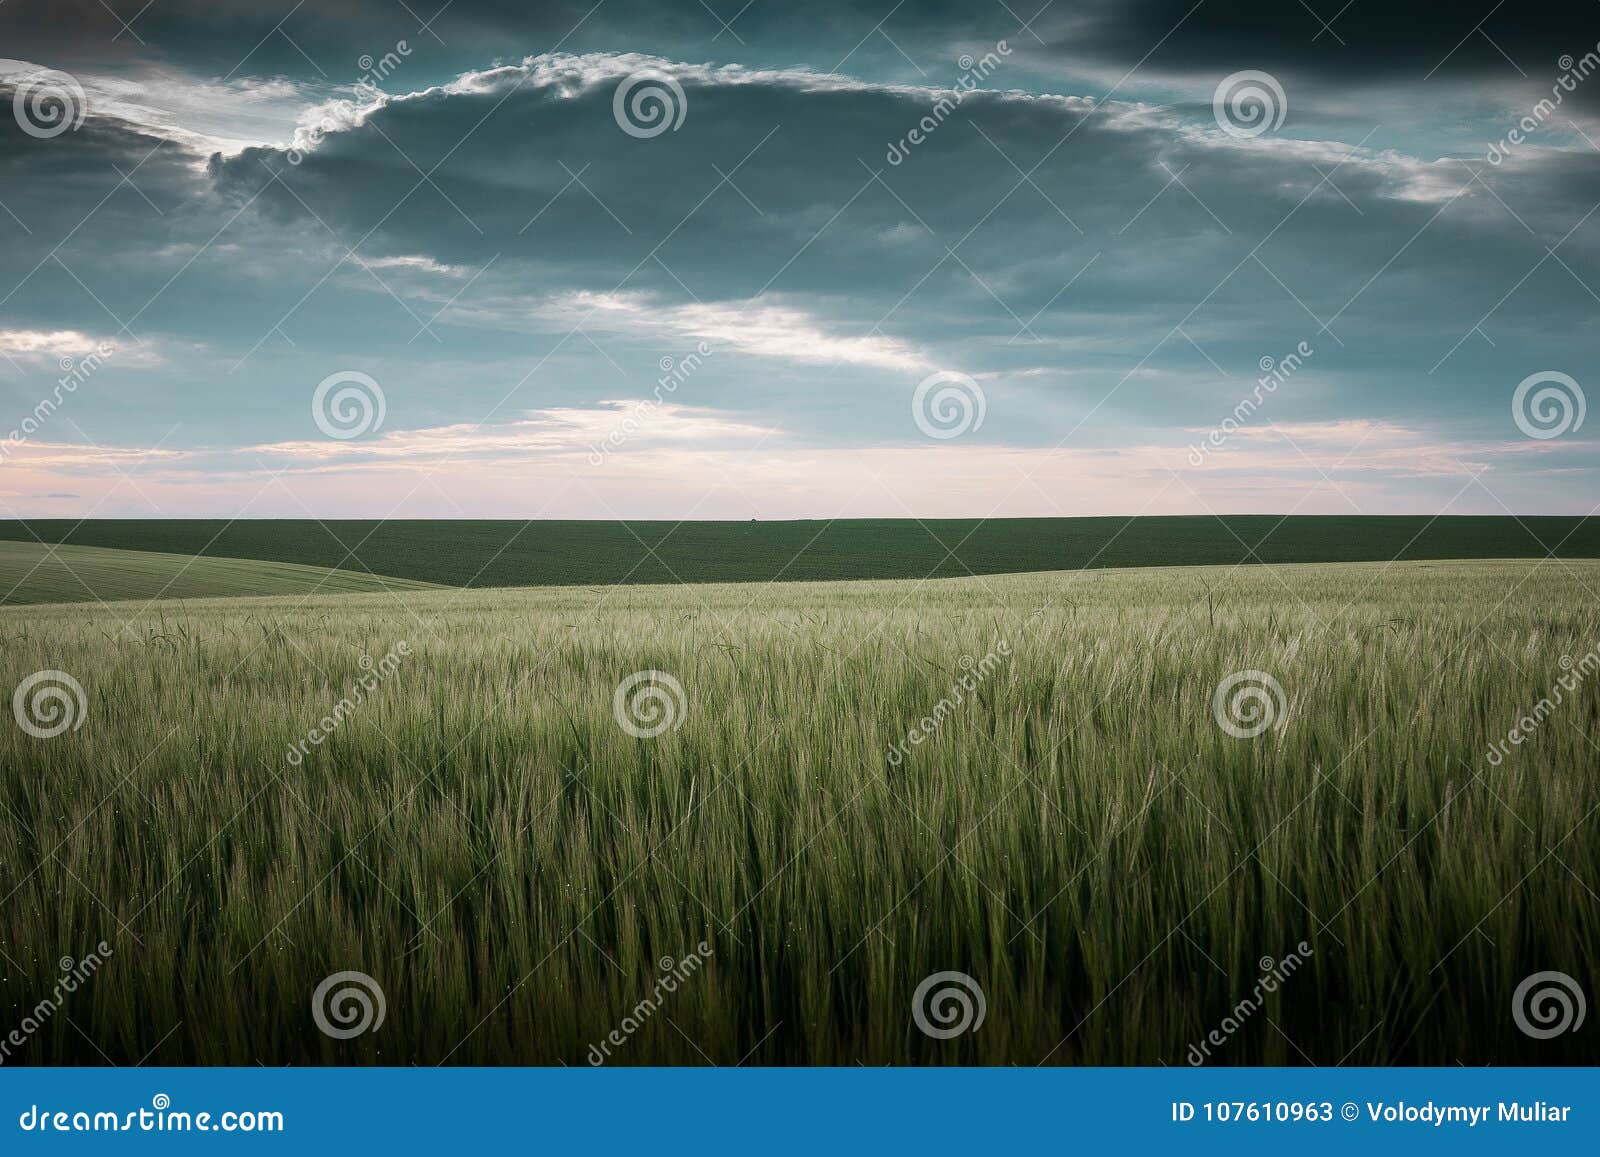 No campo aberto, o trigo cresce, sobre a terra lá é uma nuvem. No campo aberto, o trigo cresce, sobre a terra lá é um céu nebuloso, uma noite do verão